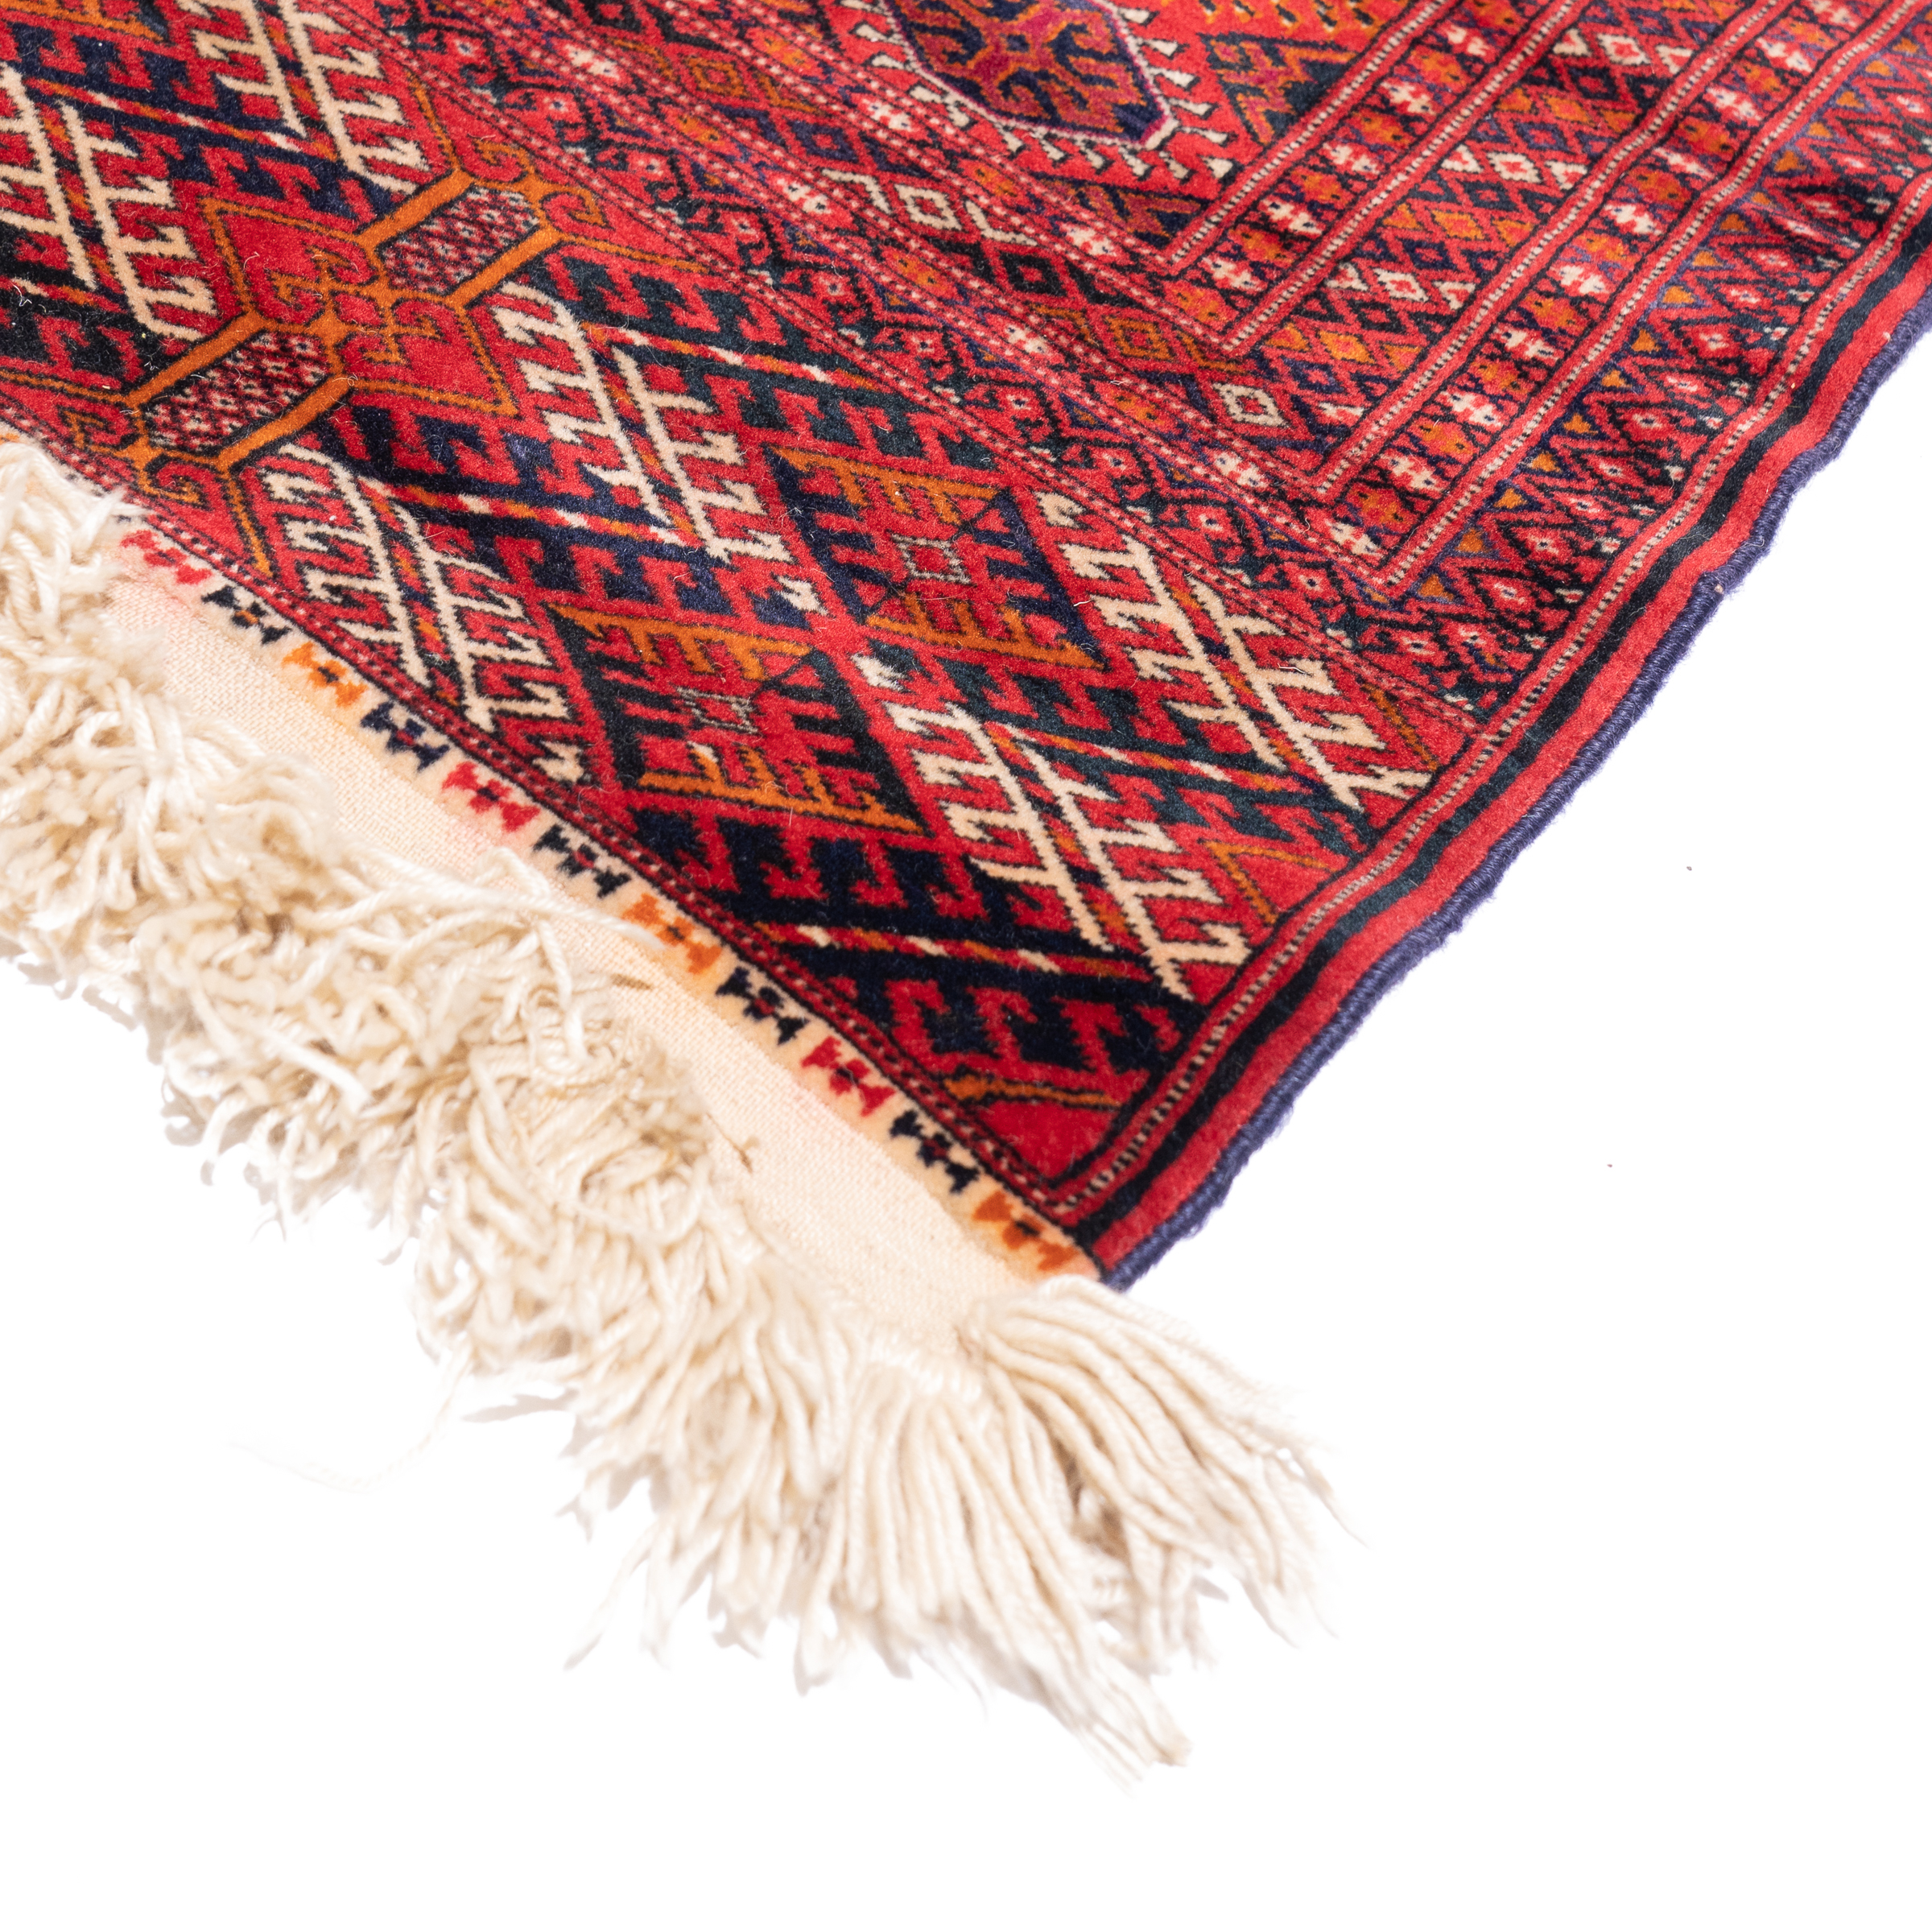 Tekke Main Carpet, Central Asia, early 20th century